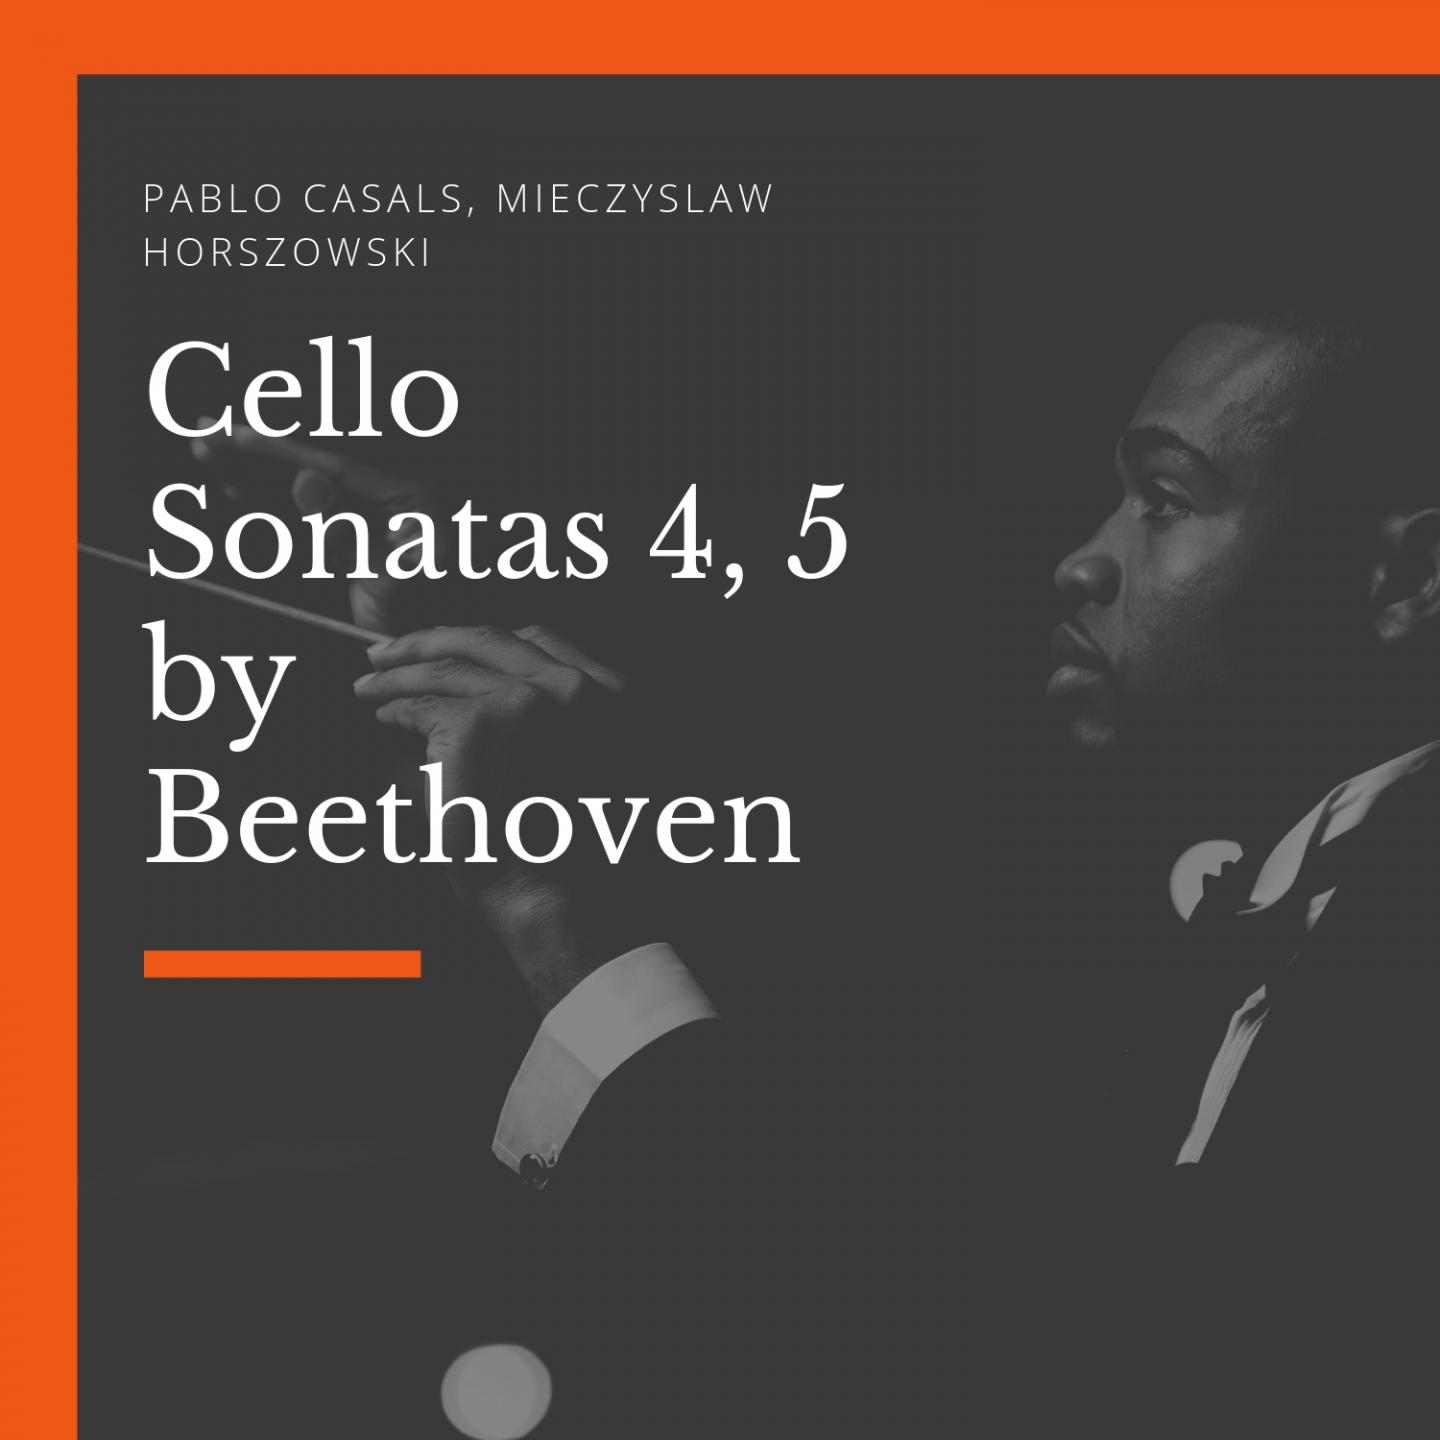 Cello Sonata, No. 5, in D Major, Op. 102 No. 2: III. Allegro - Allegro Fugato